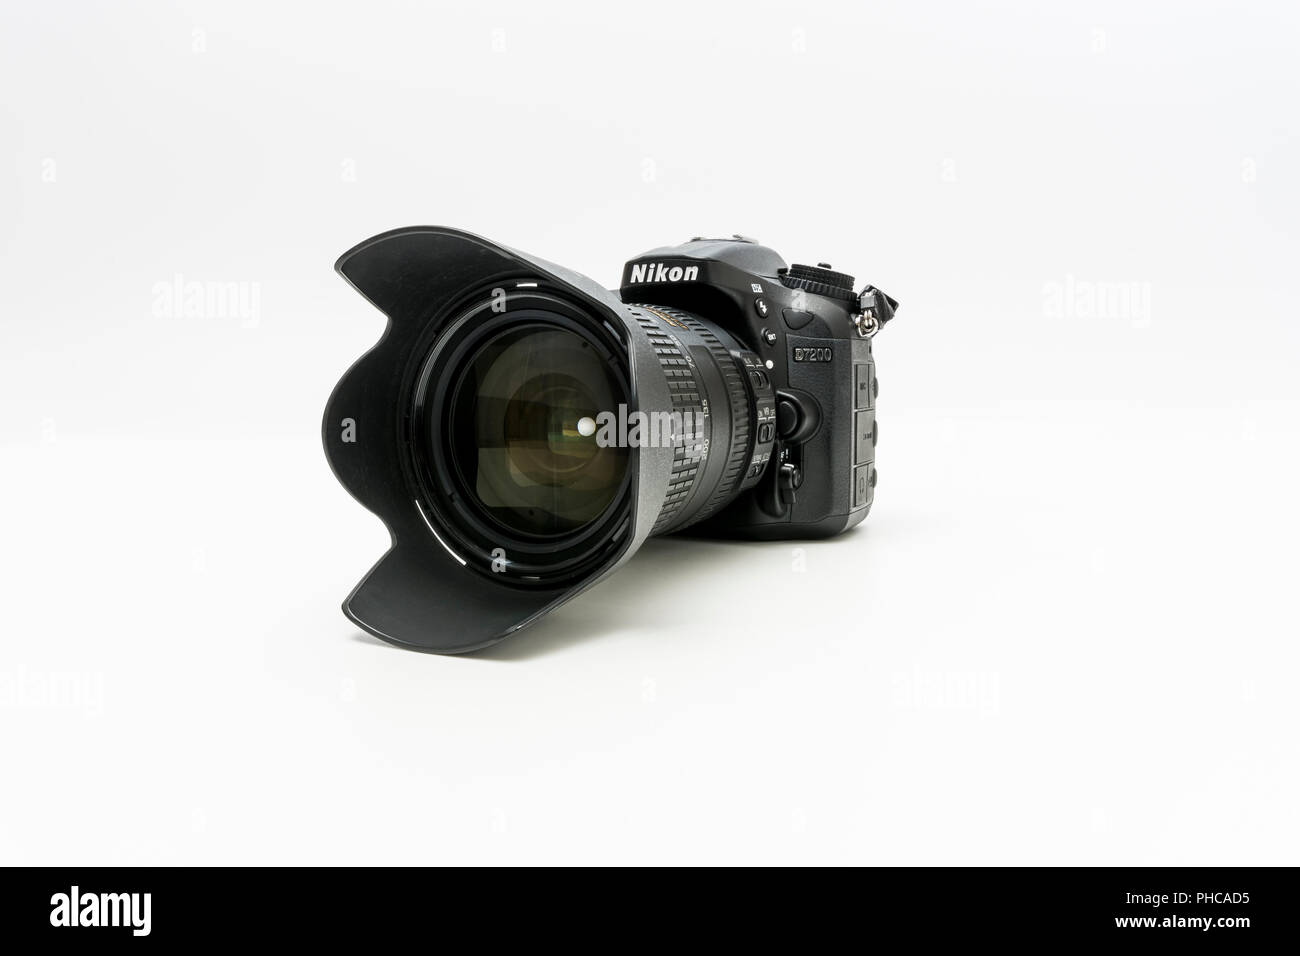 Nikon D7200 with a Nikkor 18-200 ED zoom lens Stock Photo - Alamy